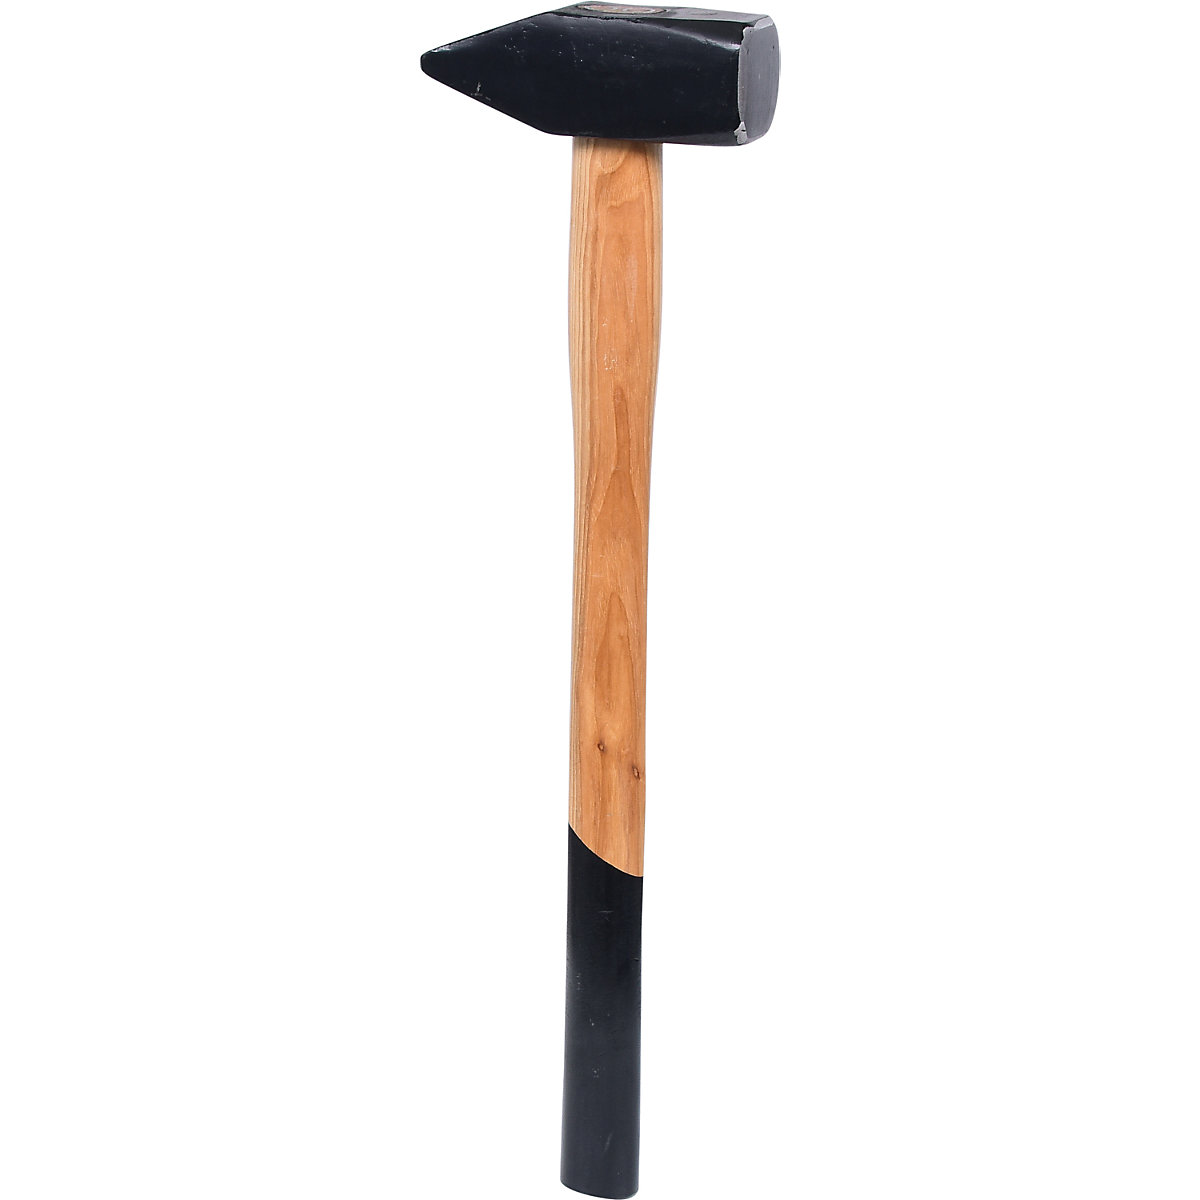 Sledgehammer with ash handle - KS Tools